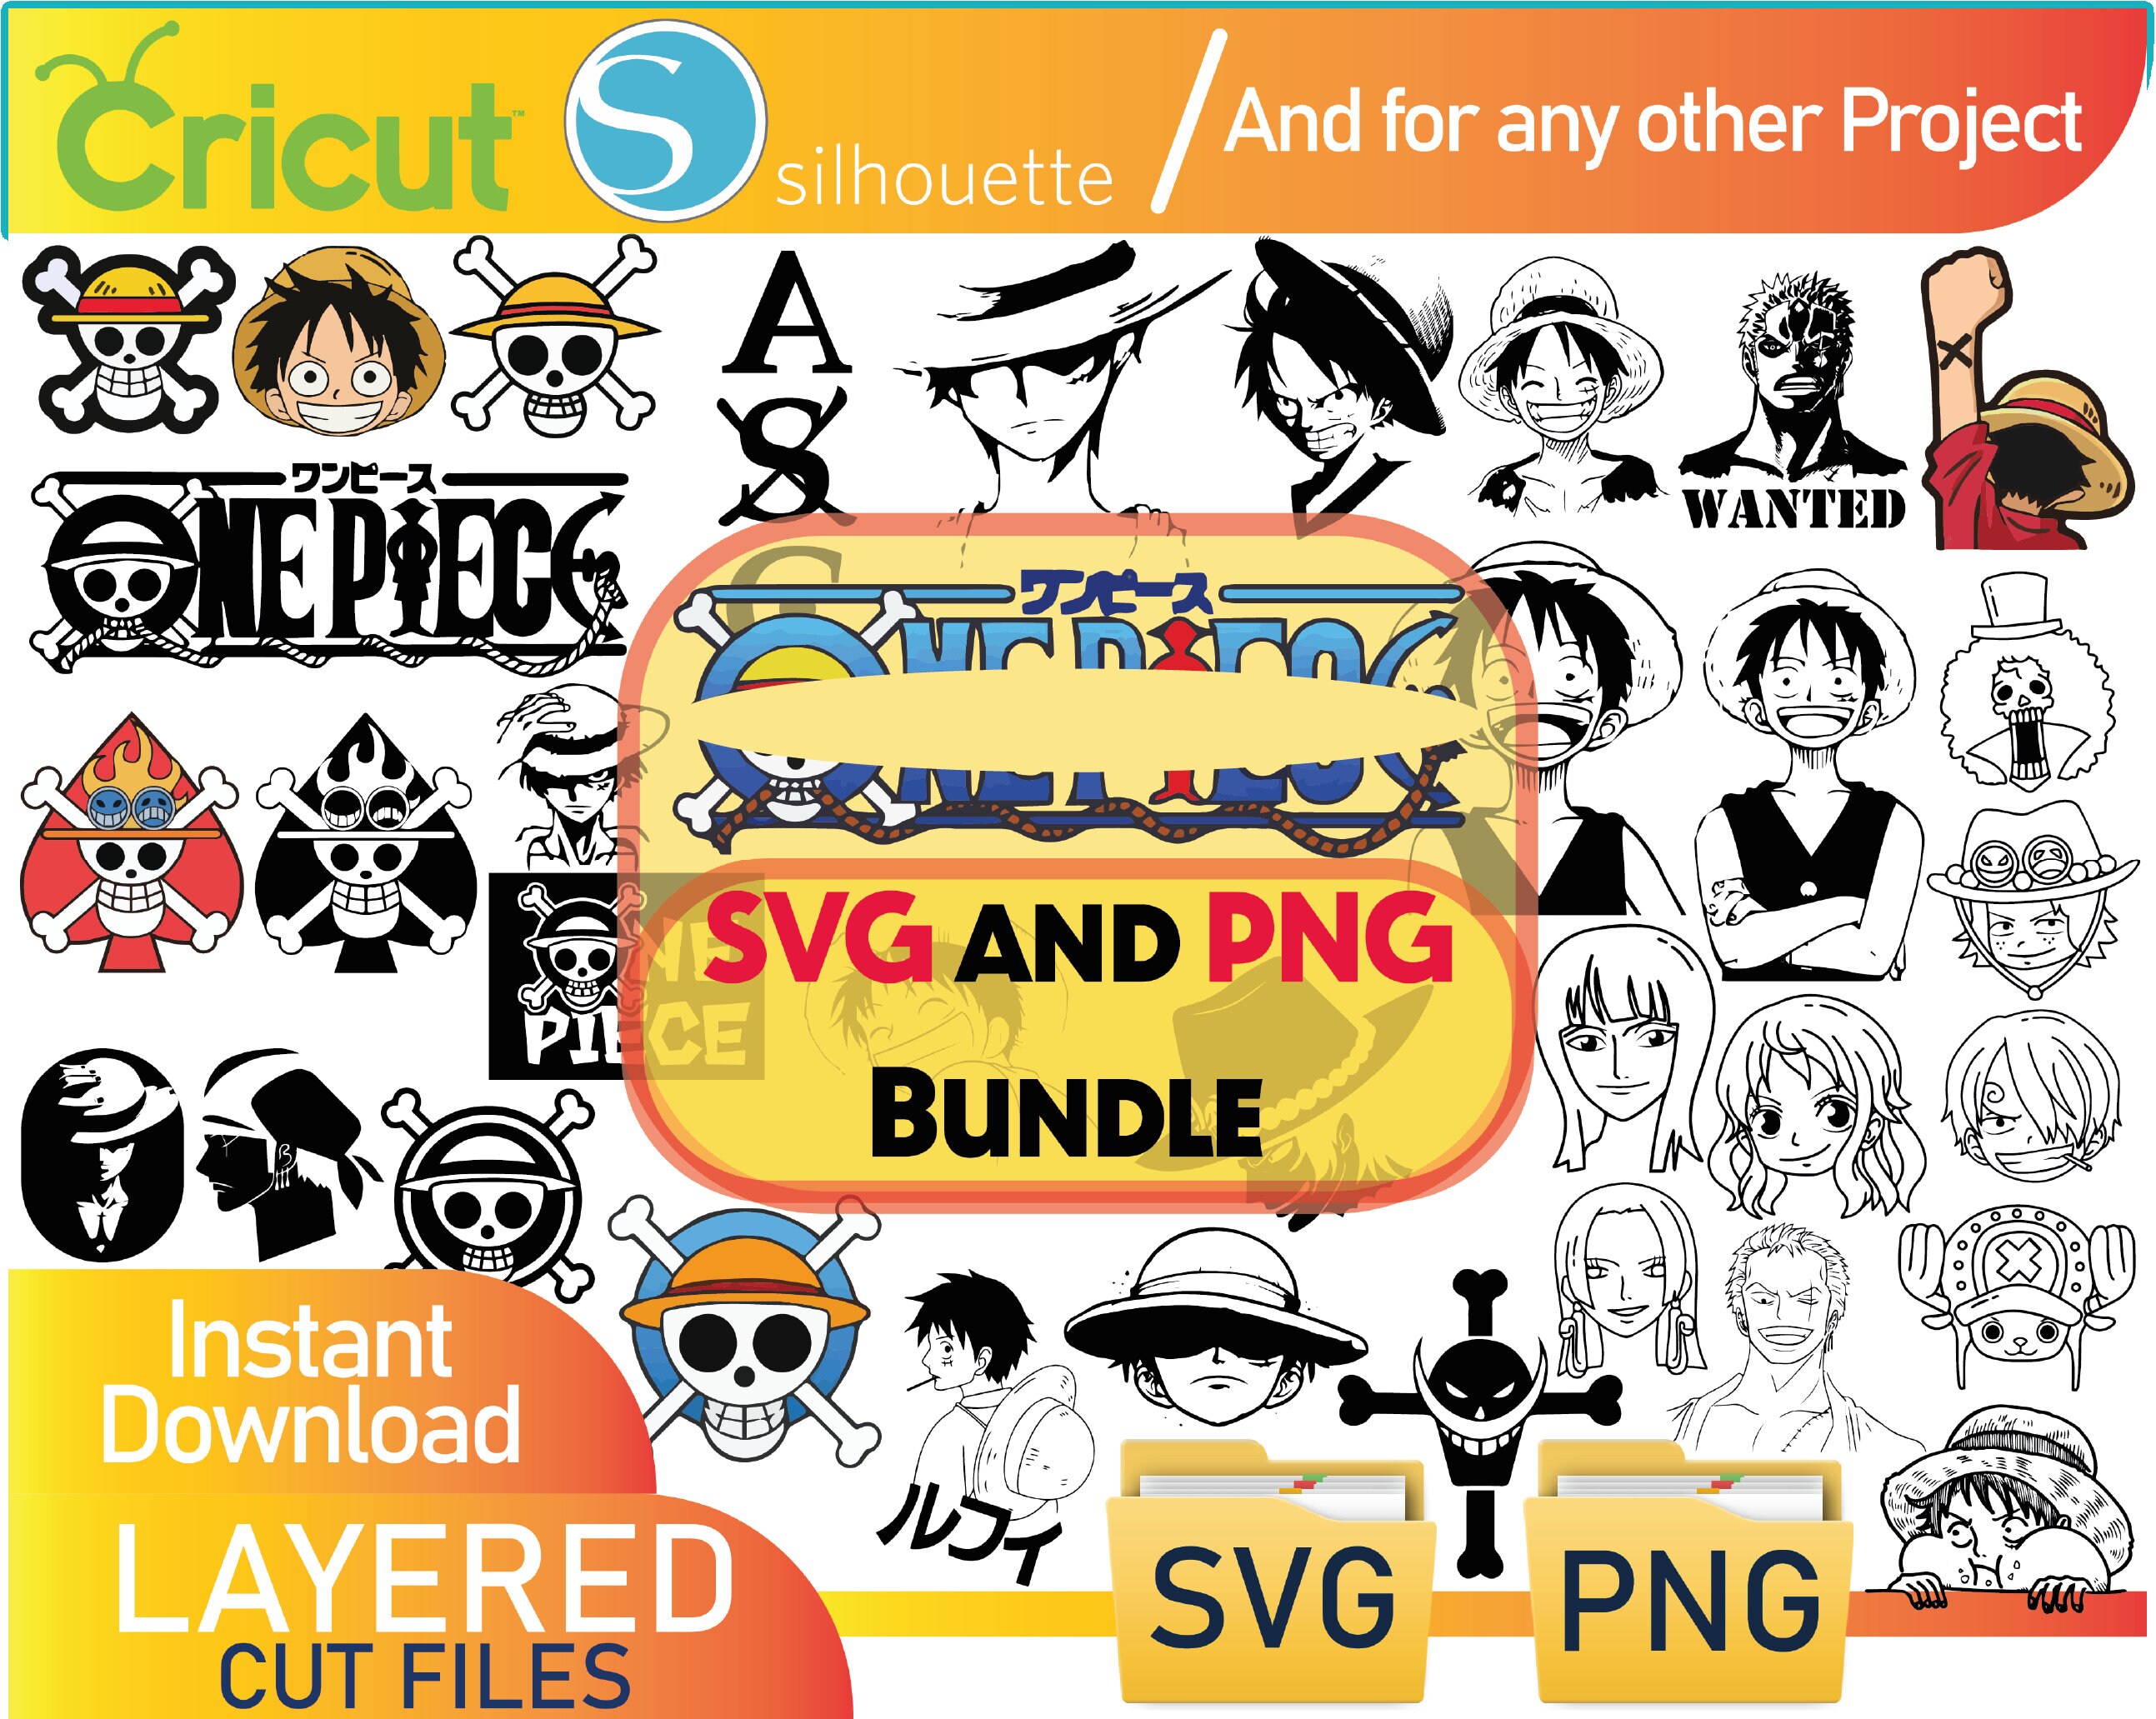 Sun God Luffy Gear 5 SVG, Luffy Grear 5 Logo SVG, One Piece SVG